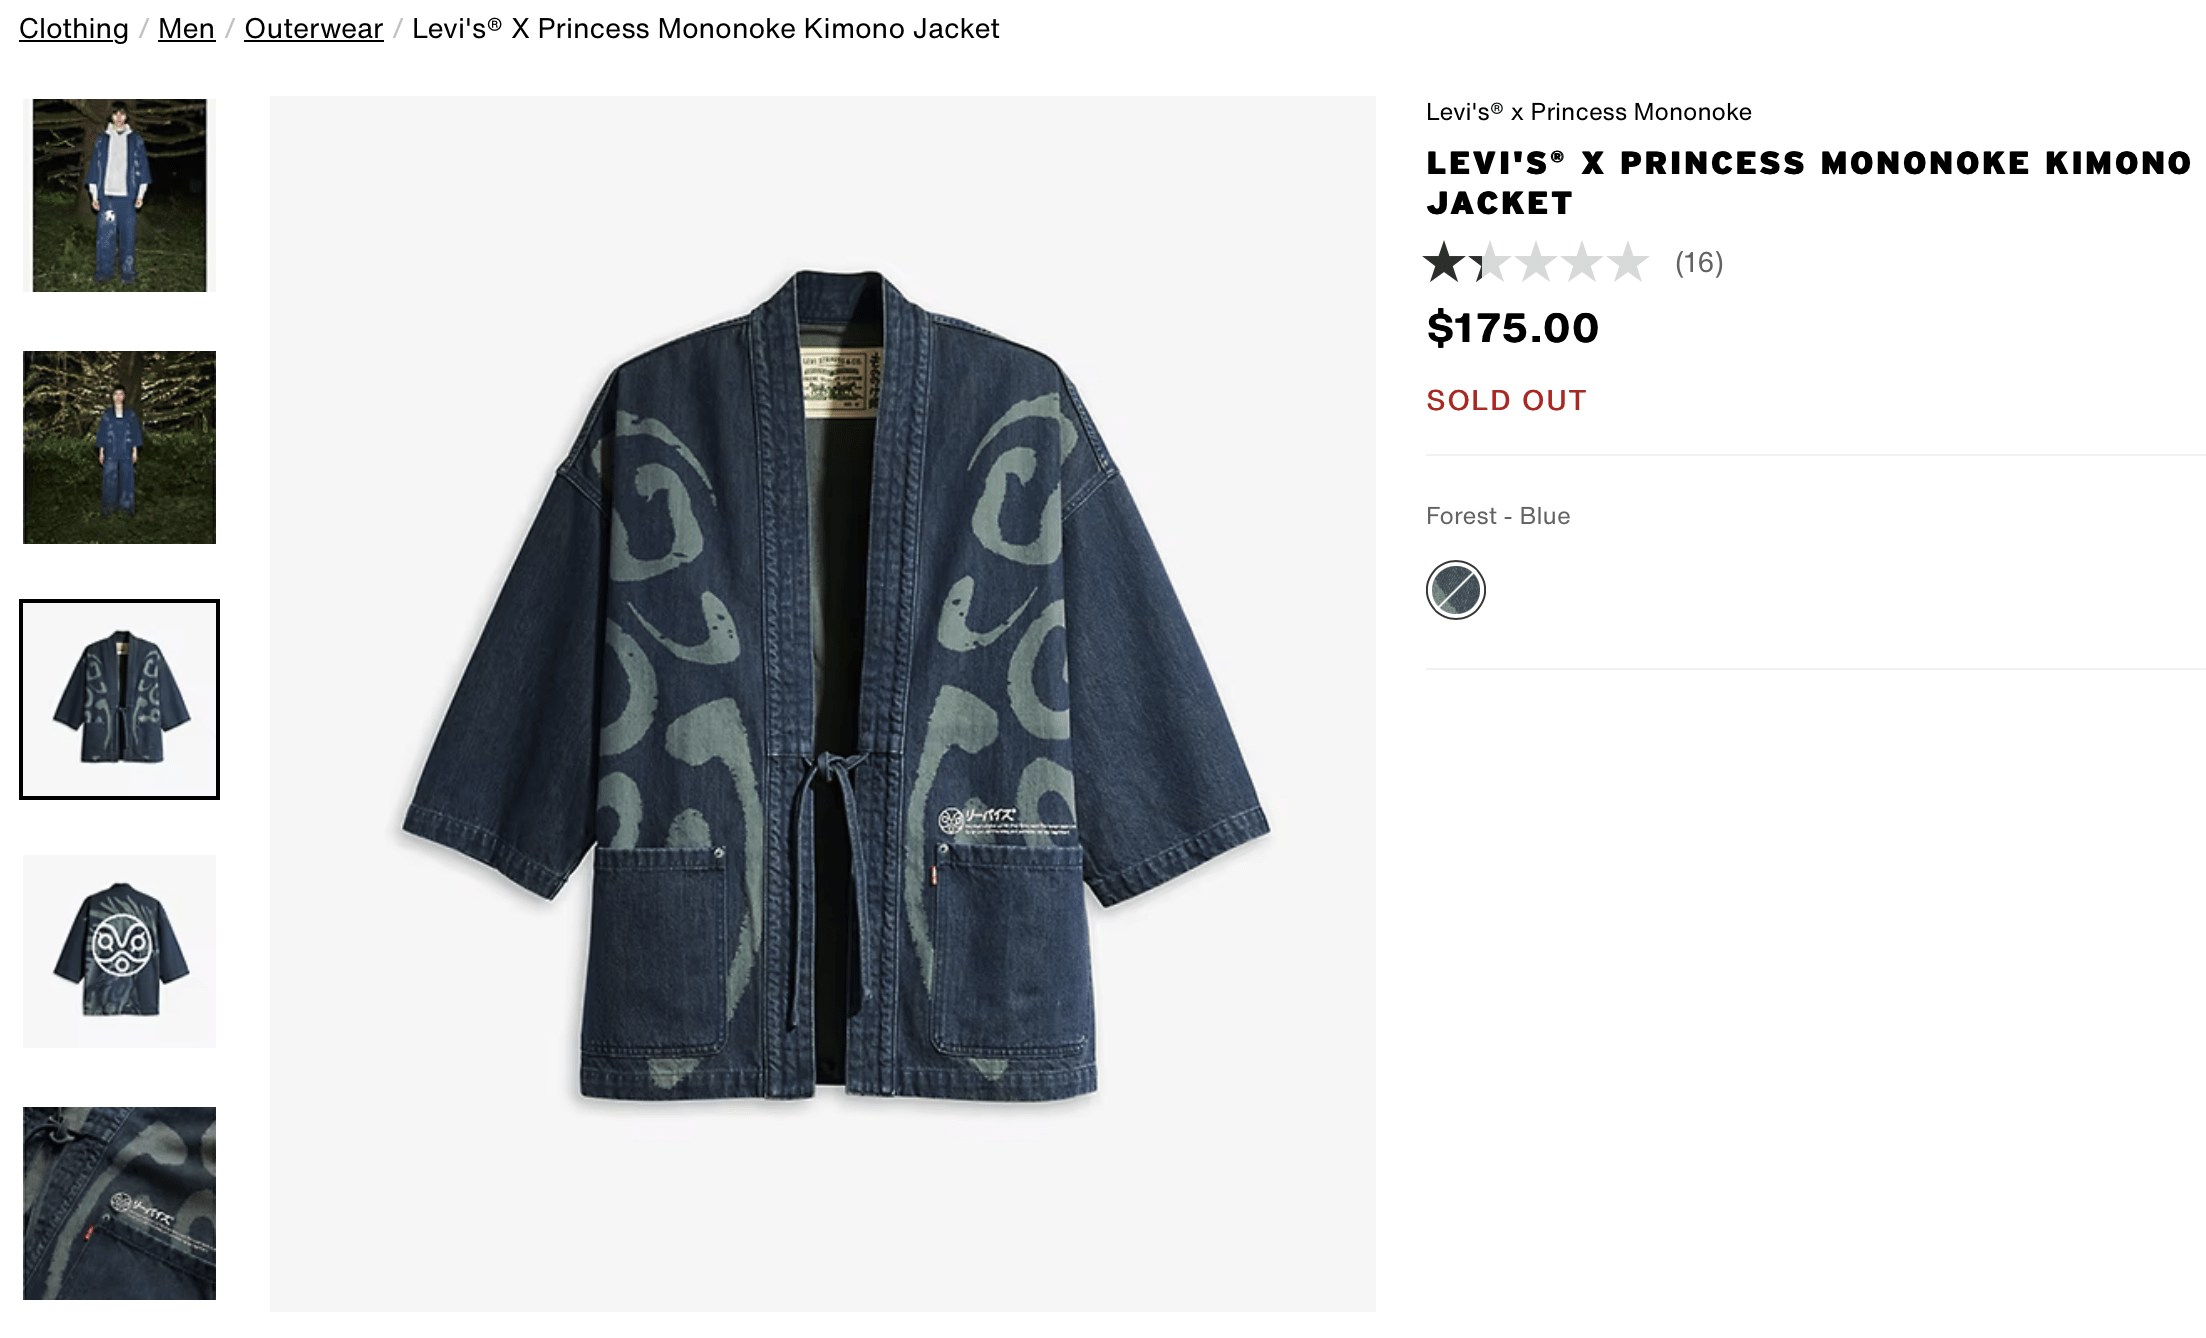 Levis mononoke kimono sold out